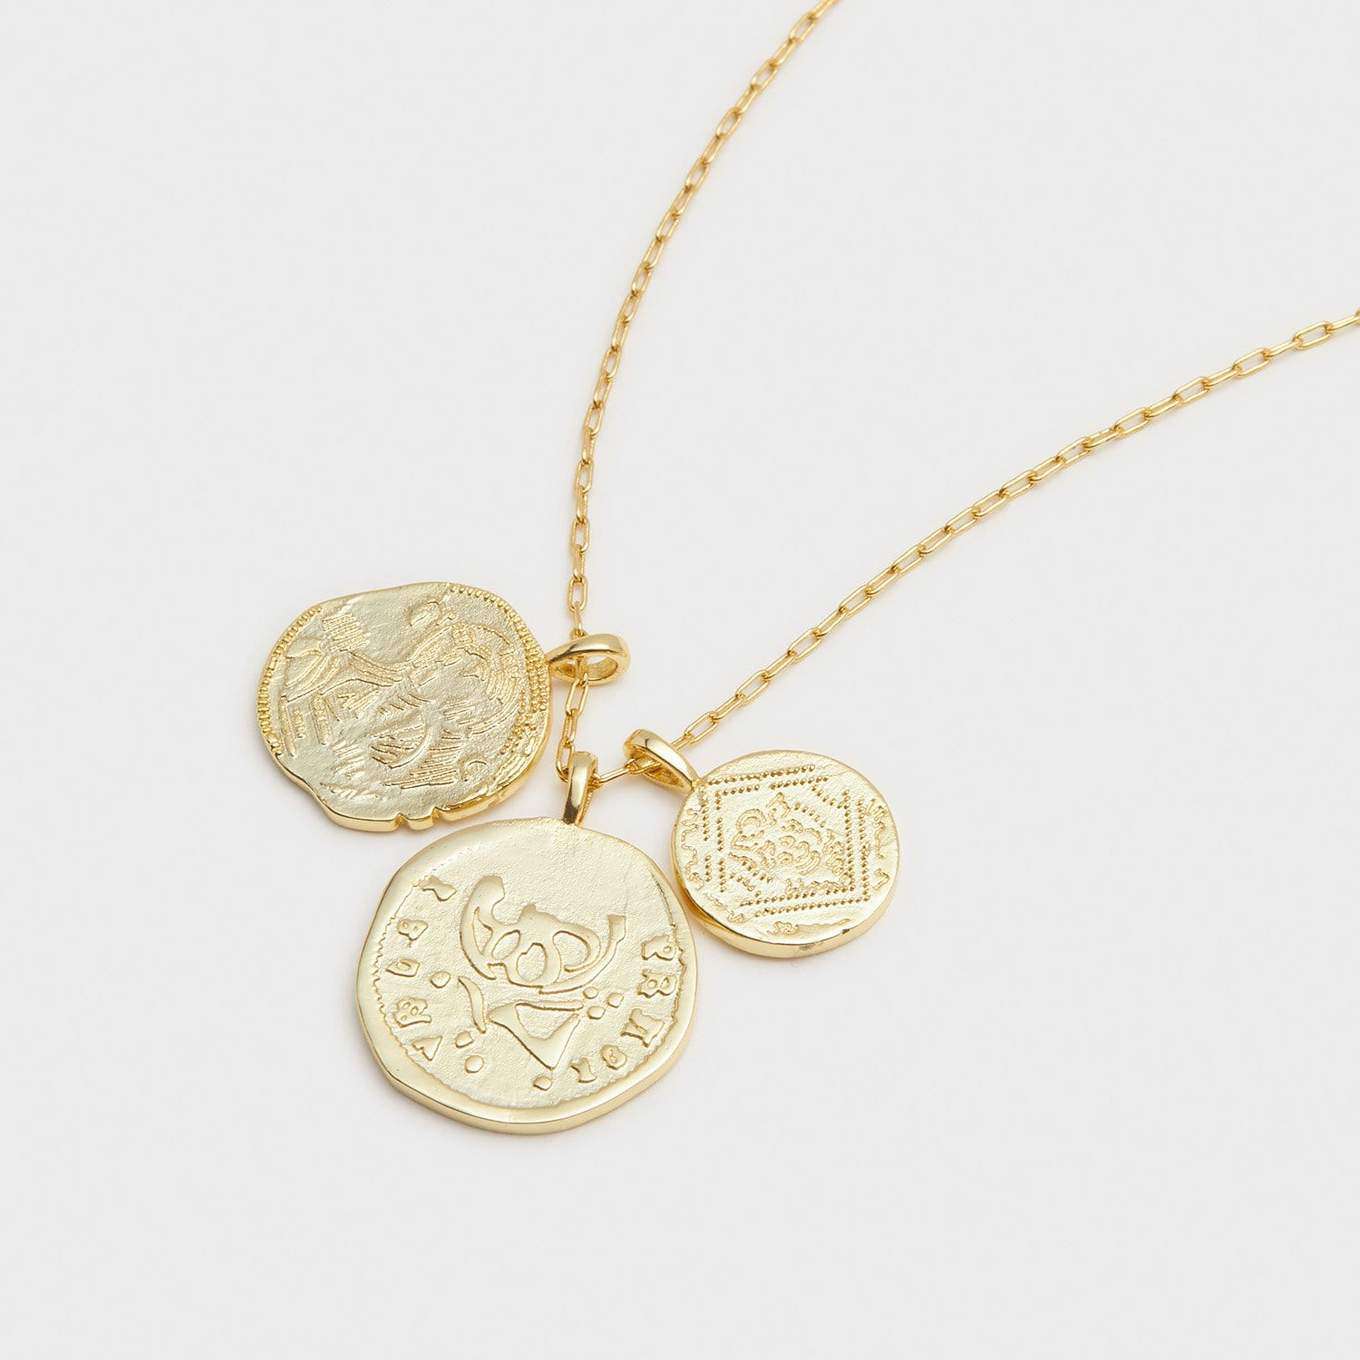 Ana Coin Pendant Necklace by Gorjana - Country Club Prep